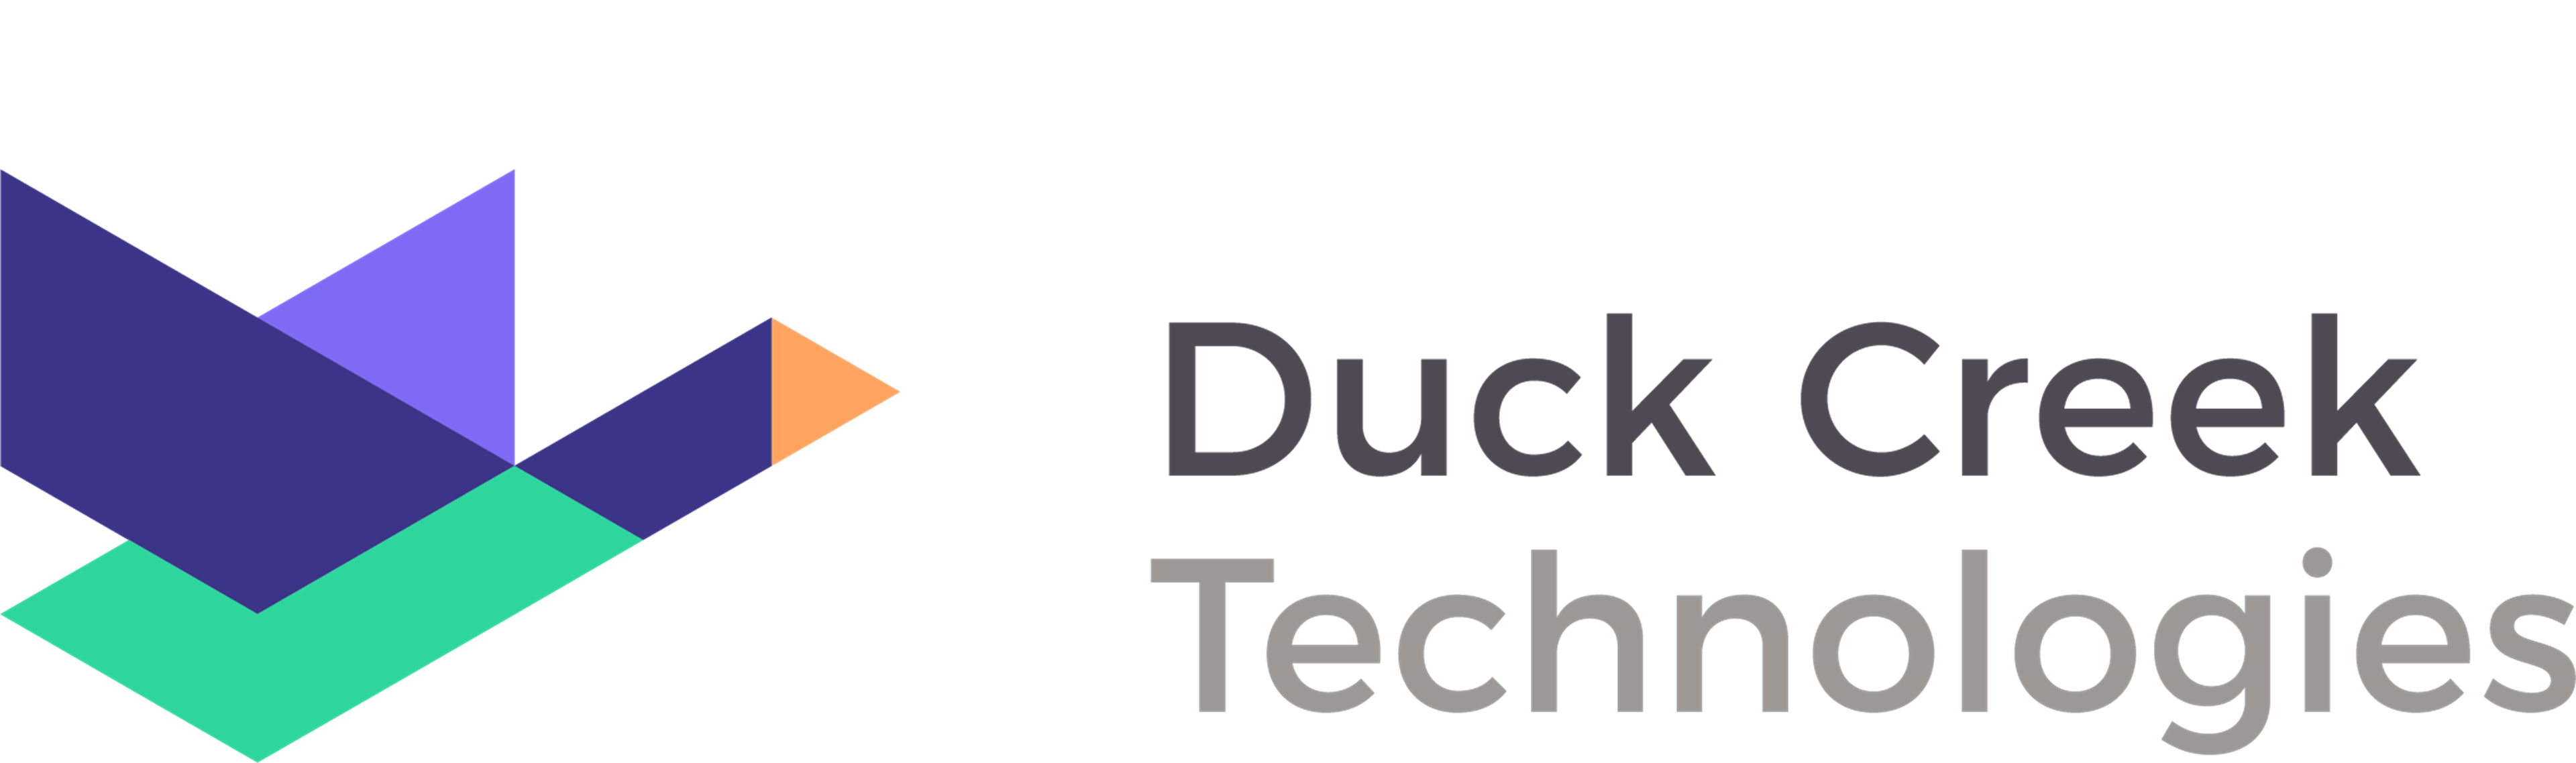 Duck Creek logosu